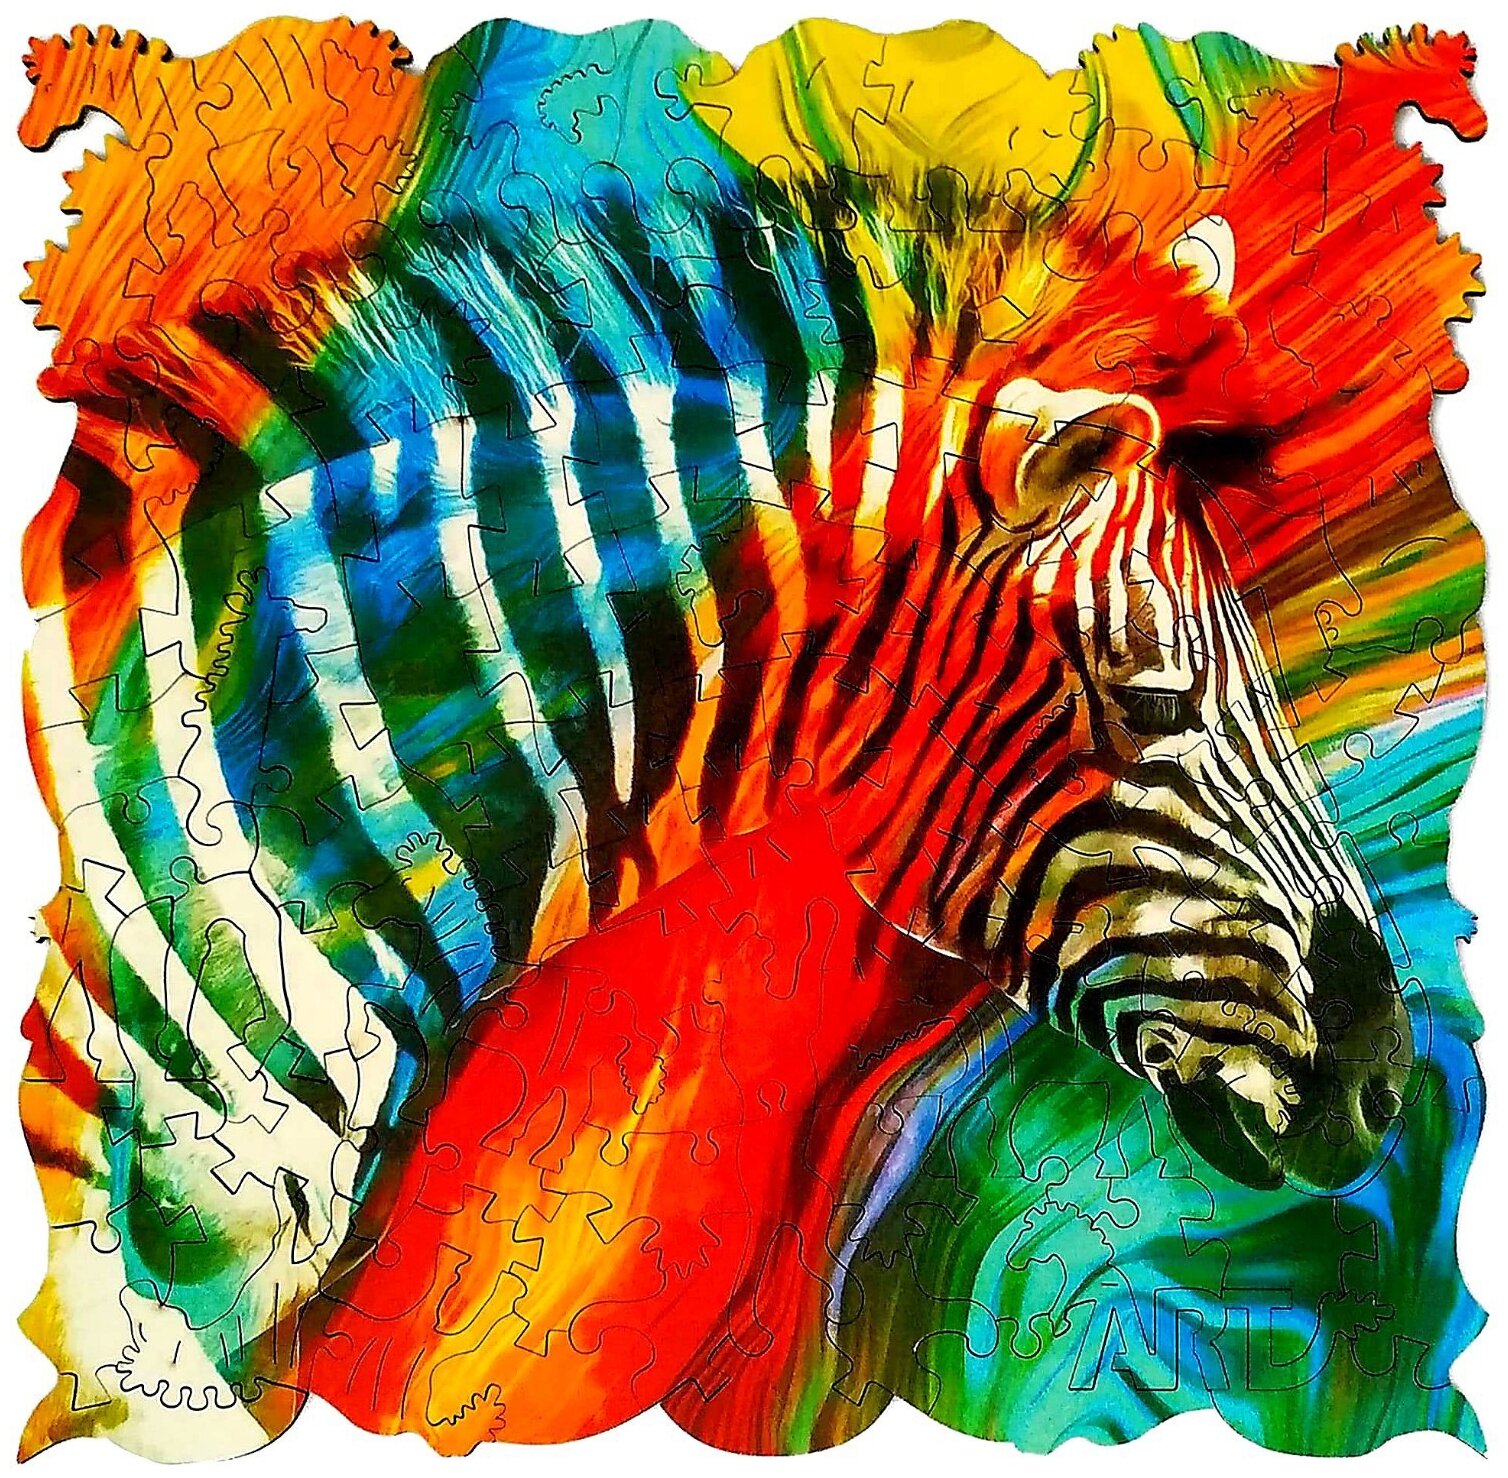 Пазл Нескучные игры Animal Art Зебра (8387), 113 дет, 23х23х0.5 см, разноцветный